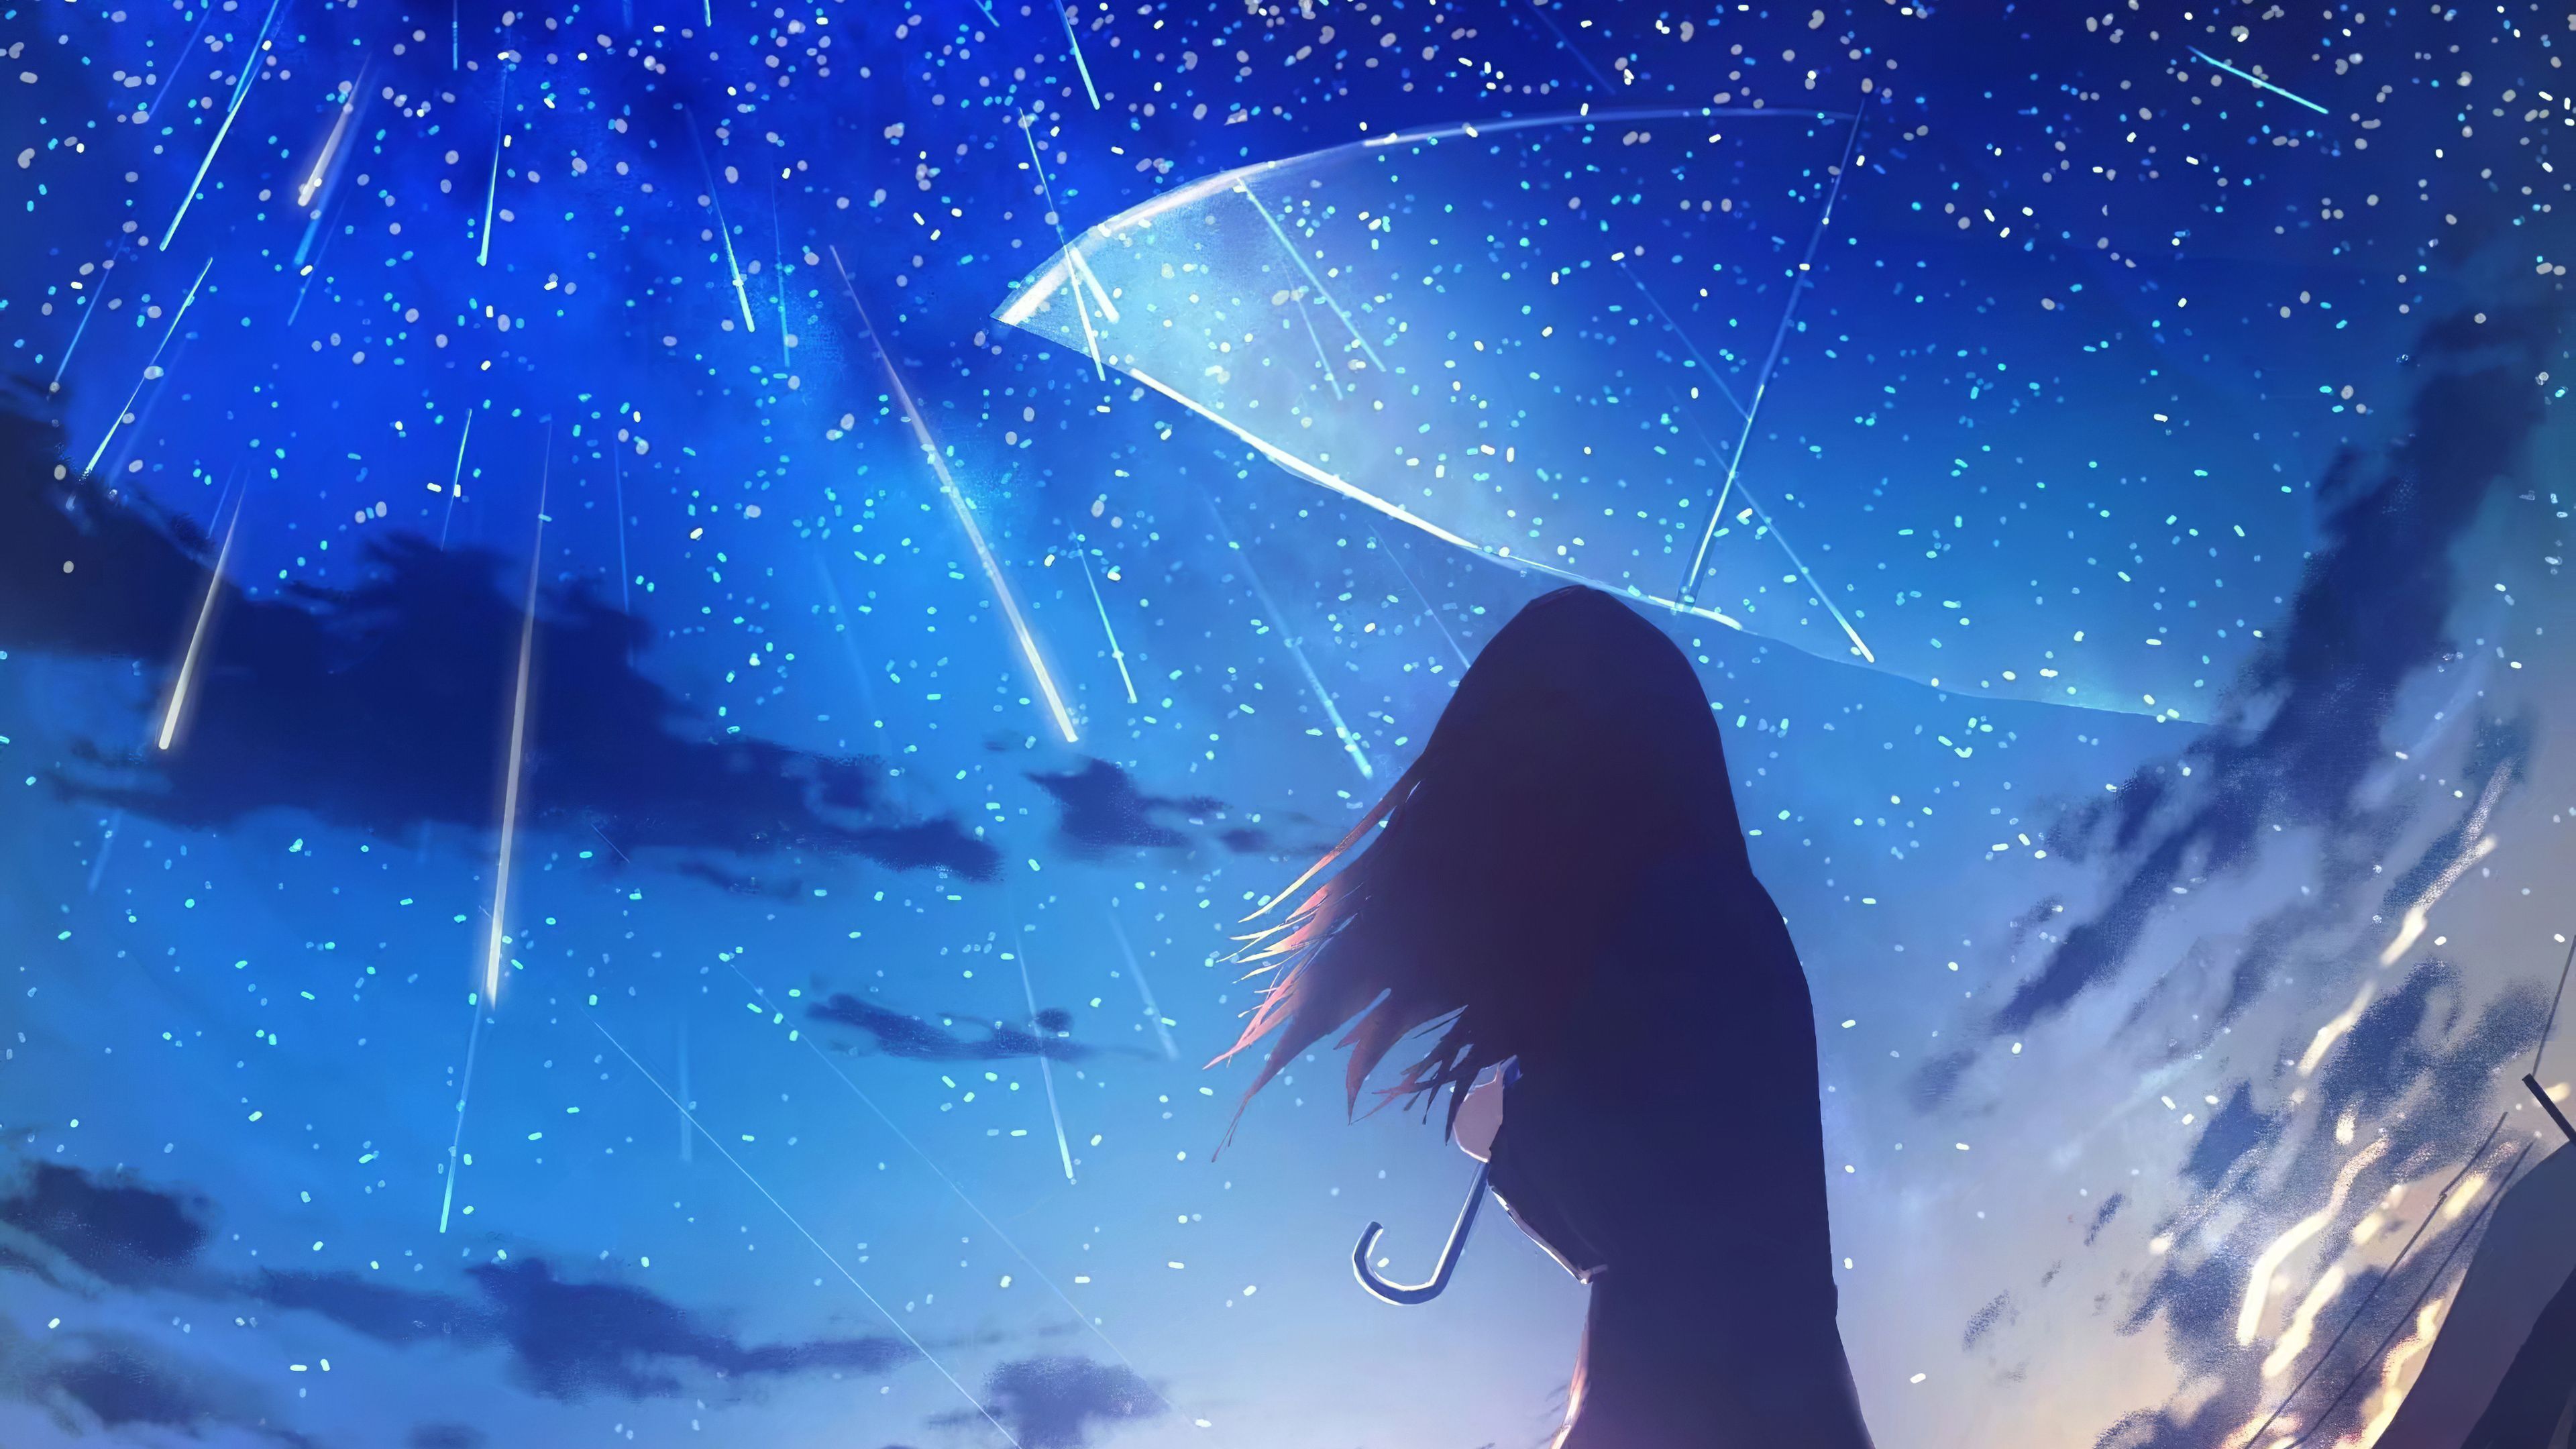 Anime Girl Umbrella Rain 4k, HD Anime, 4k Wallpaper, Image, Background, Photo and Picture